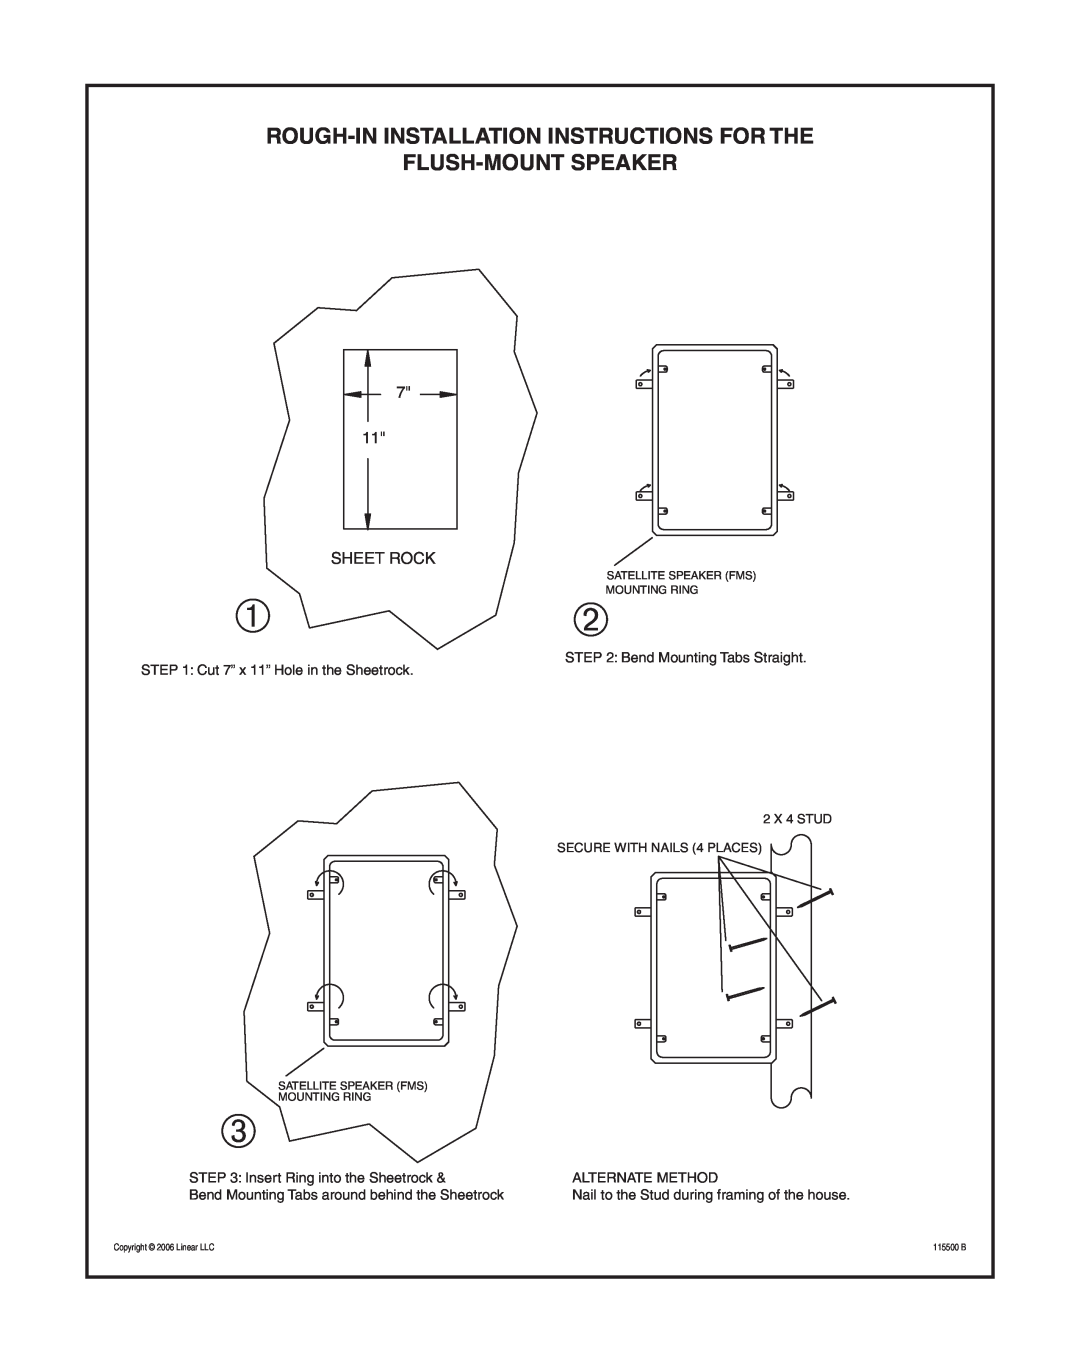 Linear 115500 B installation instructions Rough-Ininstallation Instructions For The, Flush-Mountspeaker, 7 11 SHEET ROCK 